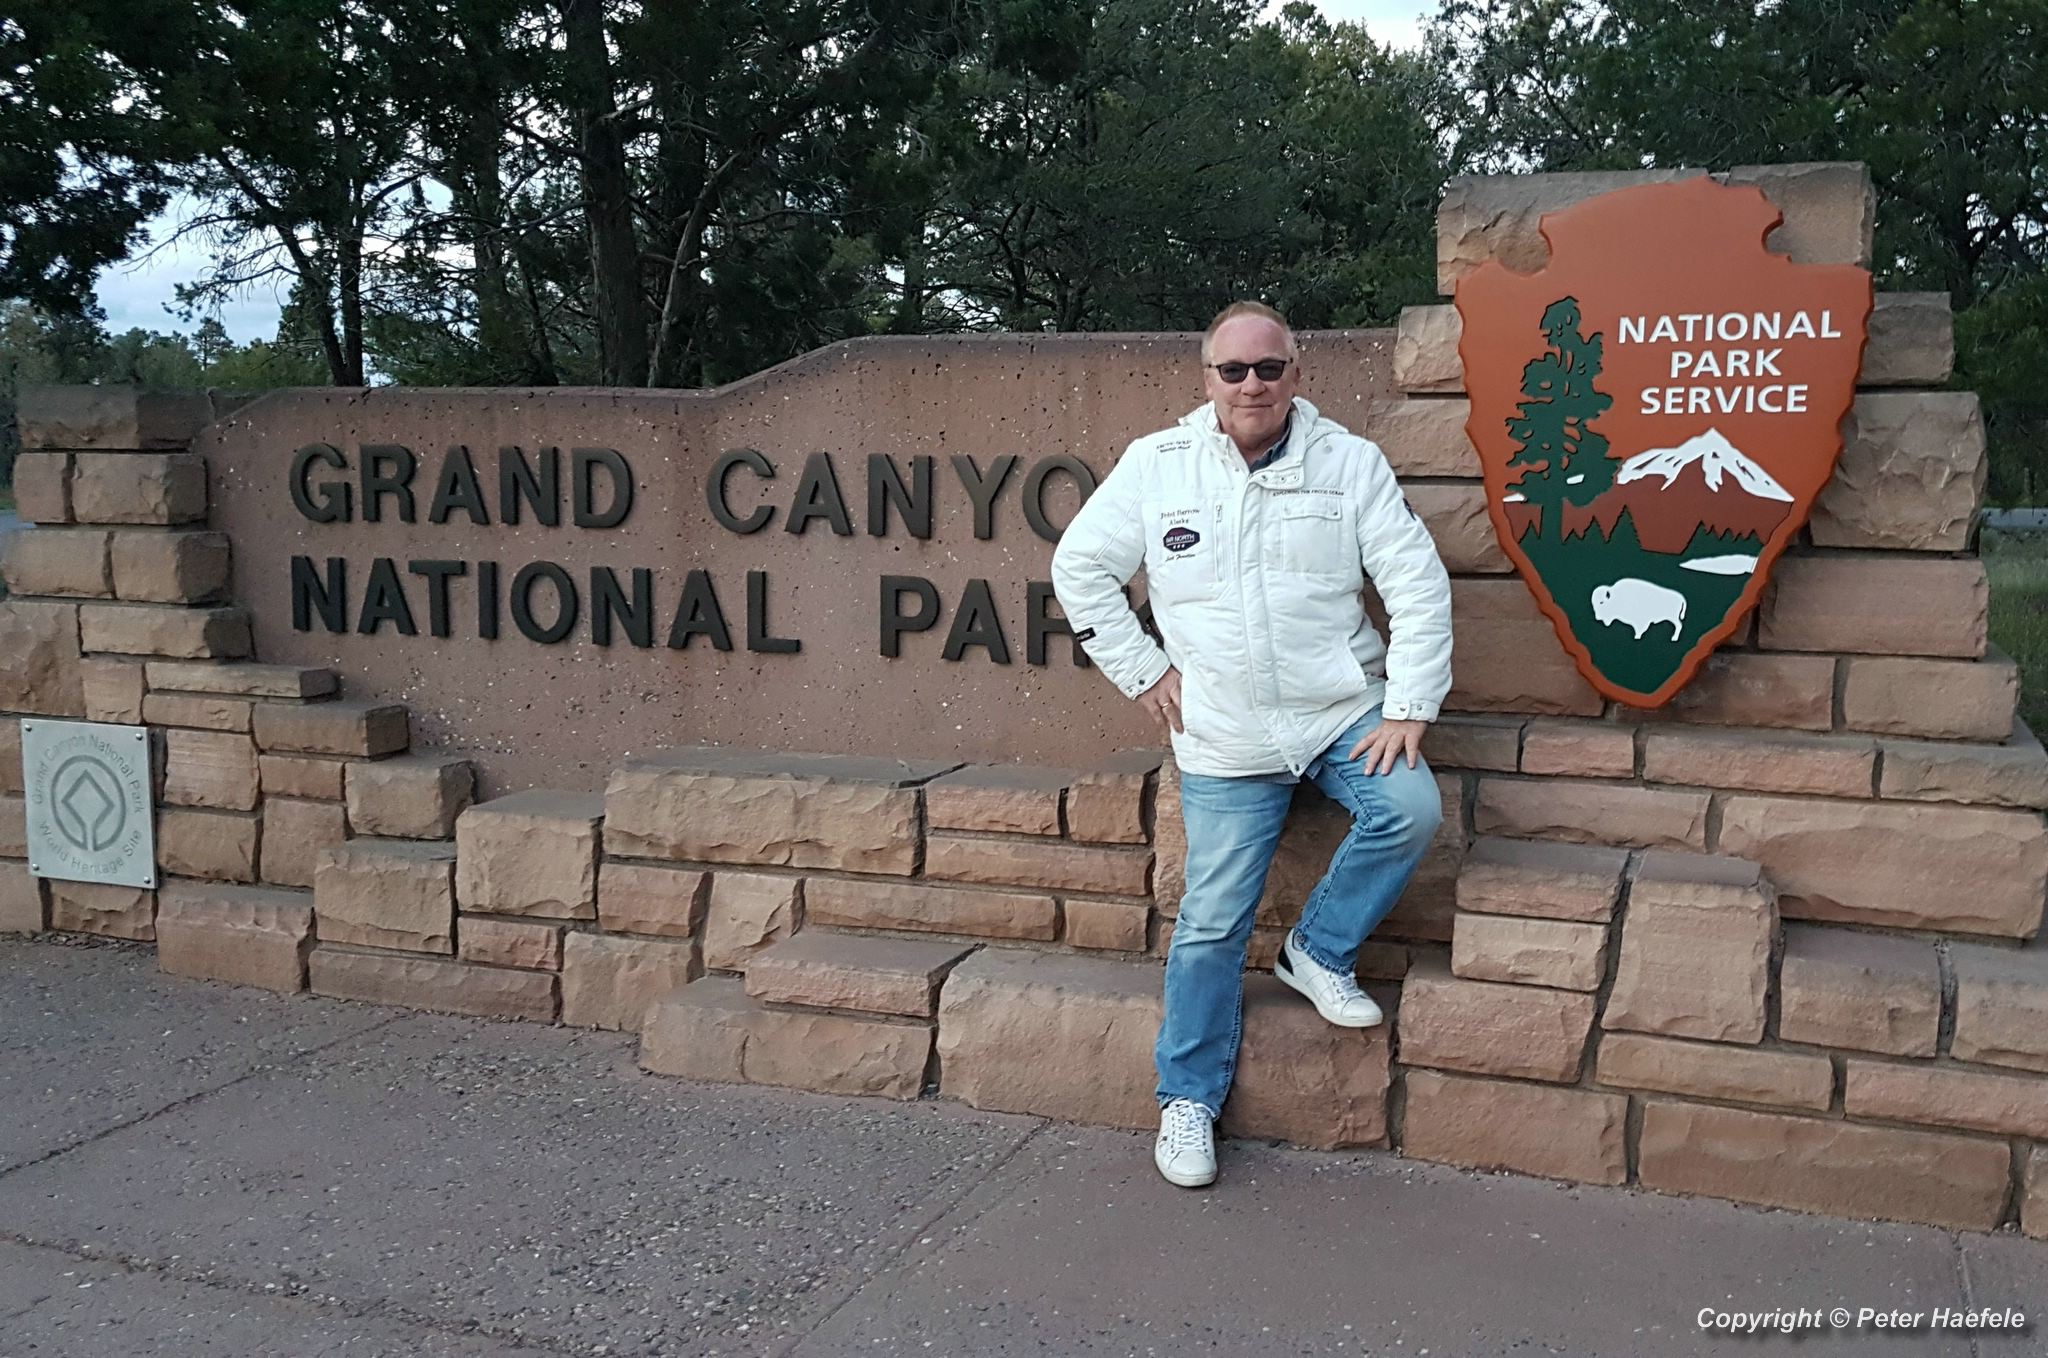 Roadtrip USA - Grand Canyon (South Rim) National Park -Arizona